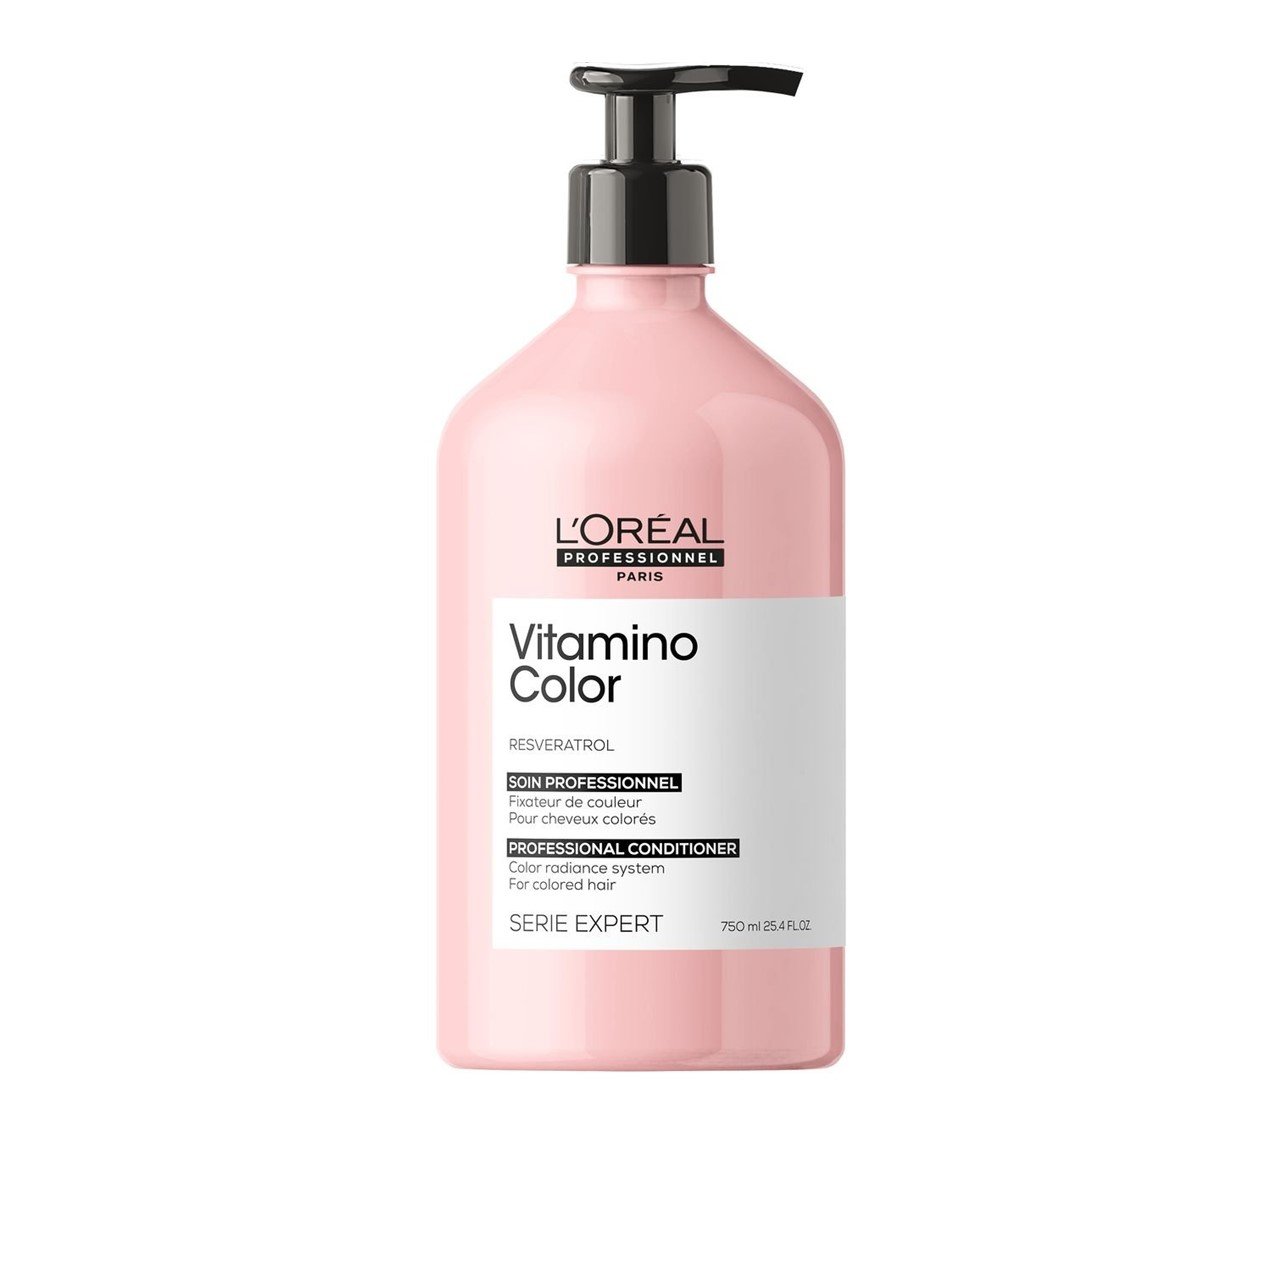 L'Oréal Professionnel Série Expert Vitamino Color Conditioner 750ml (25.36fl oz)